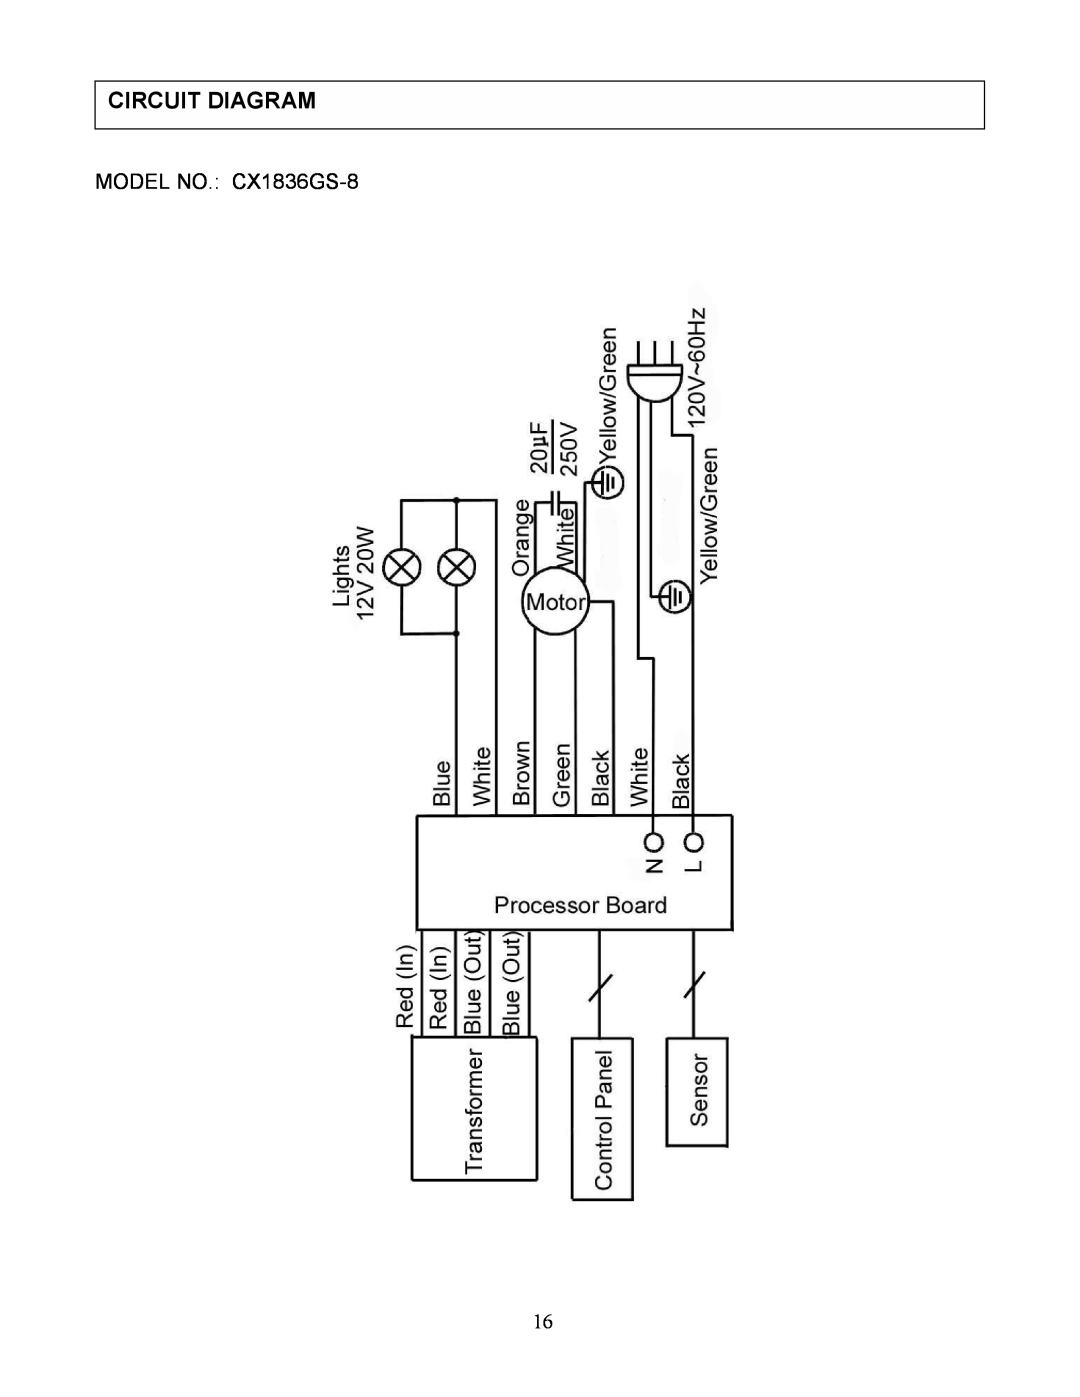 Kobe Range Hoods CX-183 installation instructions Circuit Diagram, MODEL NO.: CX1836GS-8 16 